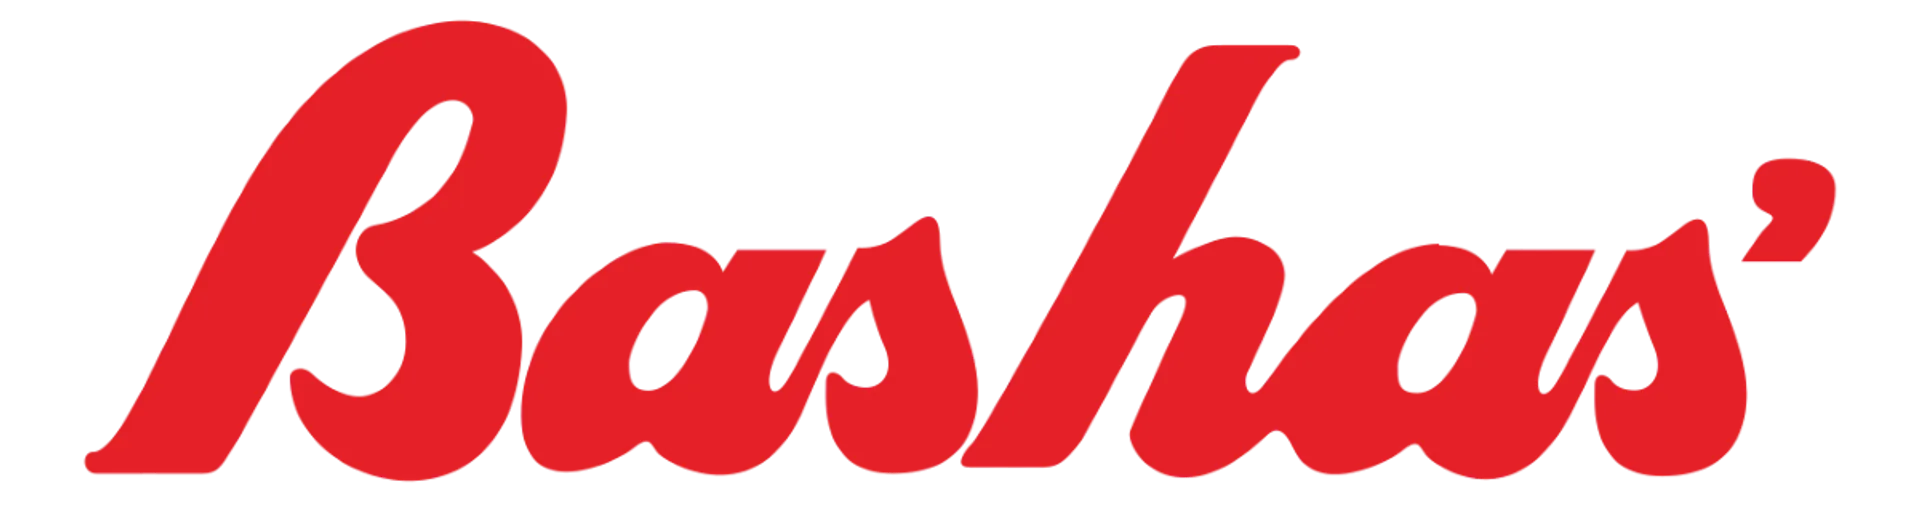 BASHAS logo current weekly ad